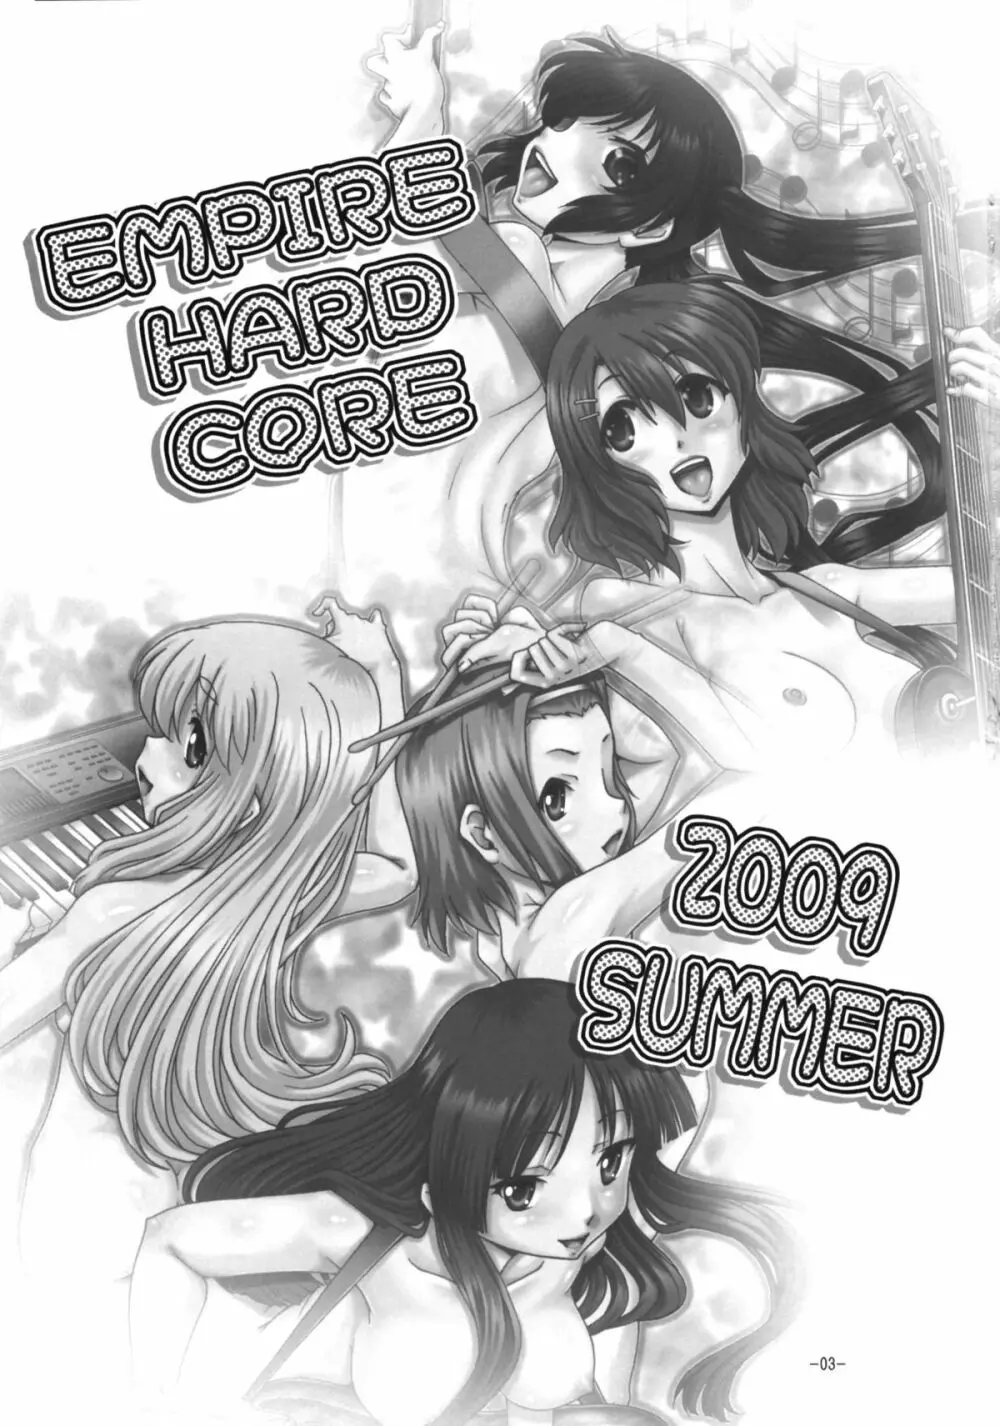 EMPIRE HARD CORE 2009 SUMMER 2ページ